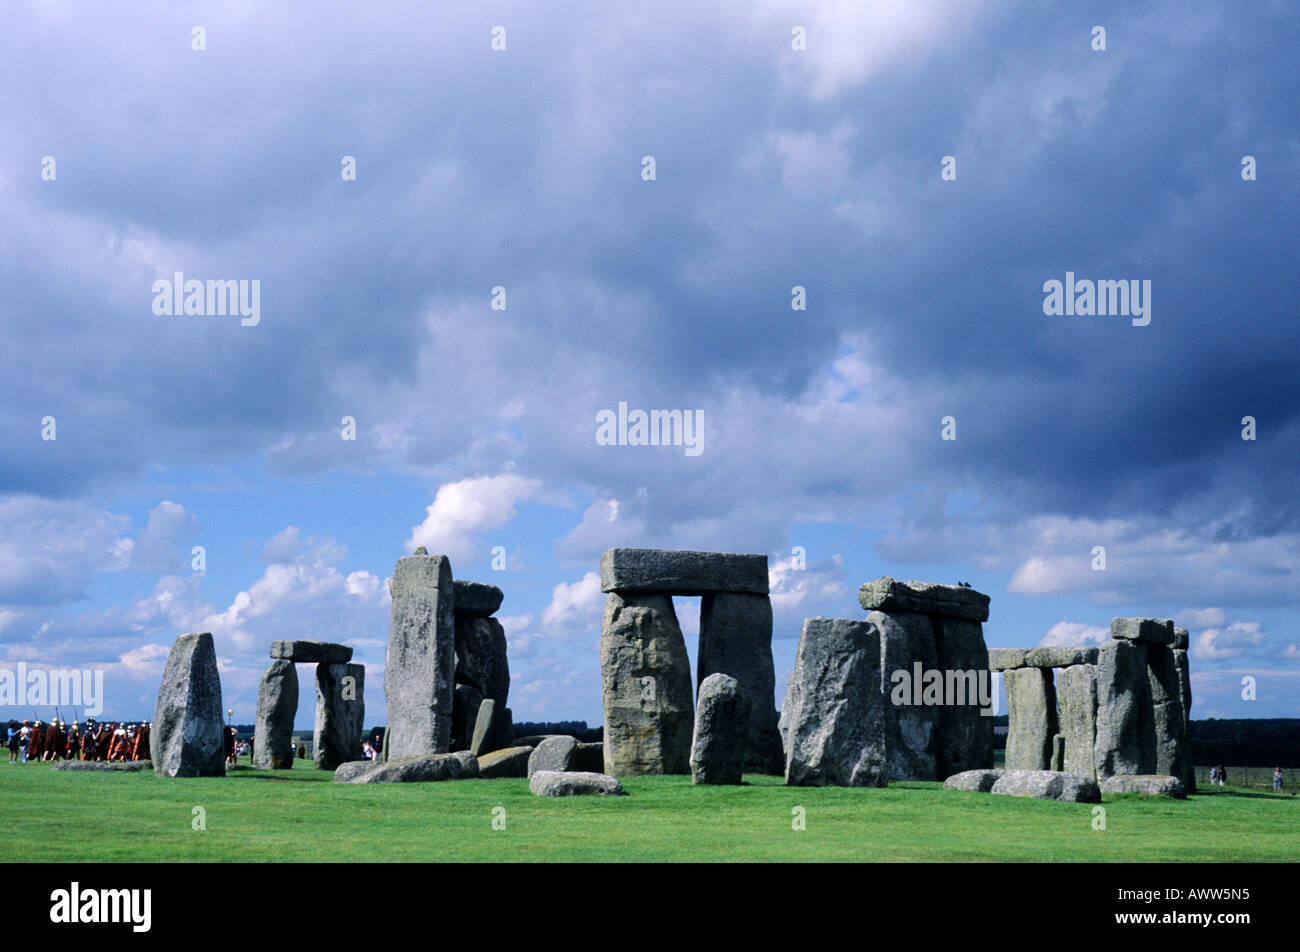 Stonehenge, Wiltshire, preistoria, storia, archeologia, Età del Bronzo, patrimonio, preistorici, viaggi, turismo, Inghilterra, Regno Unito, standi Foto Stock